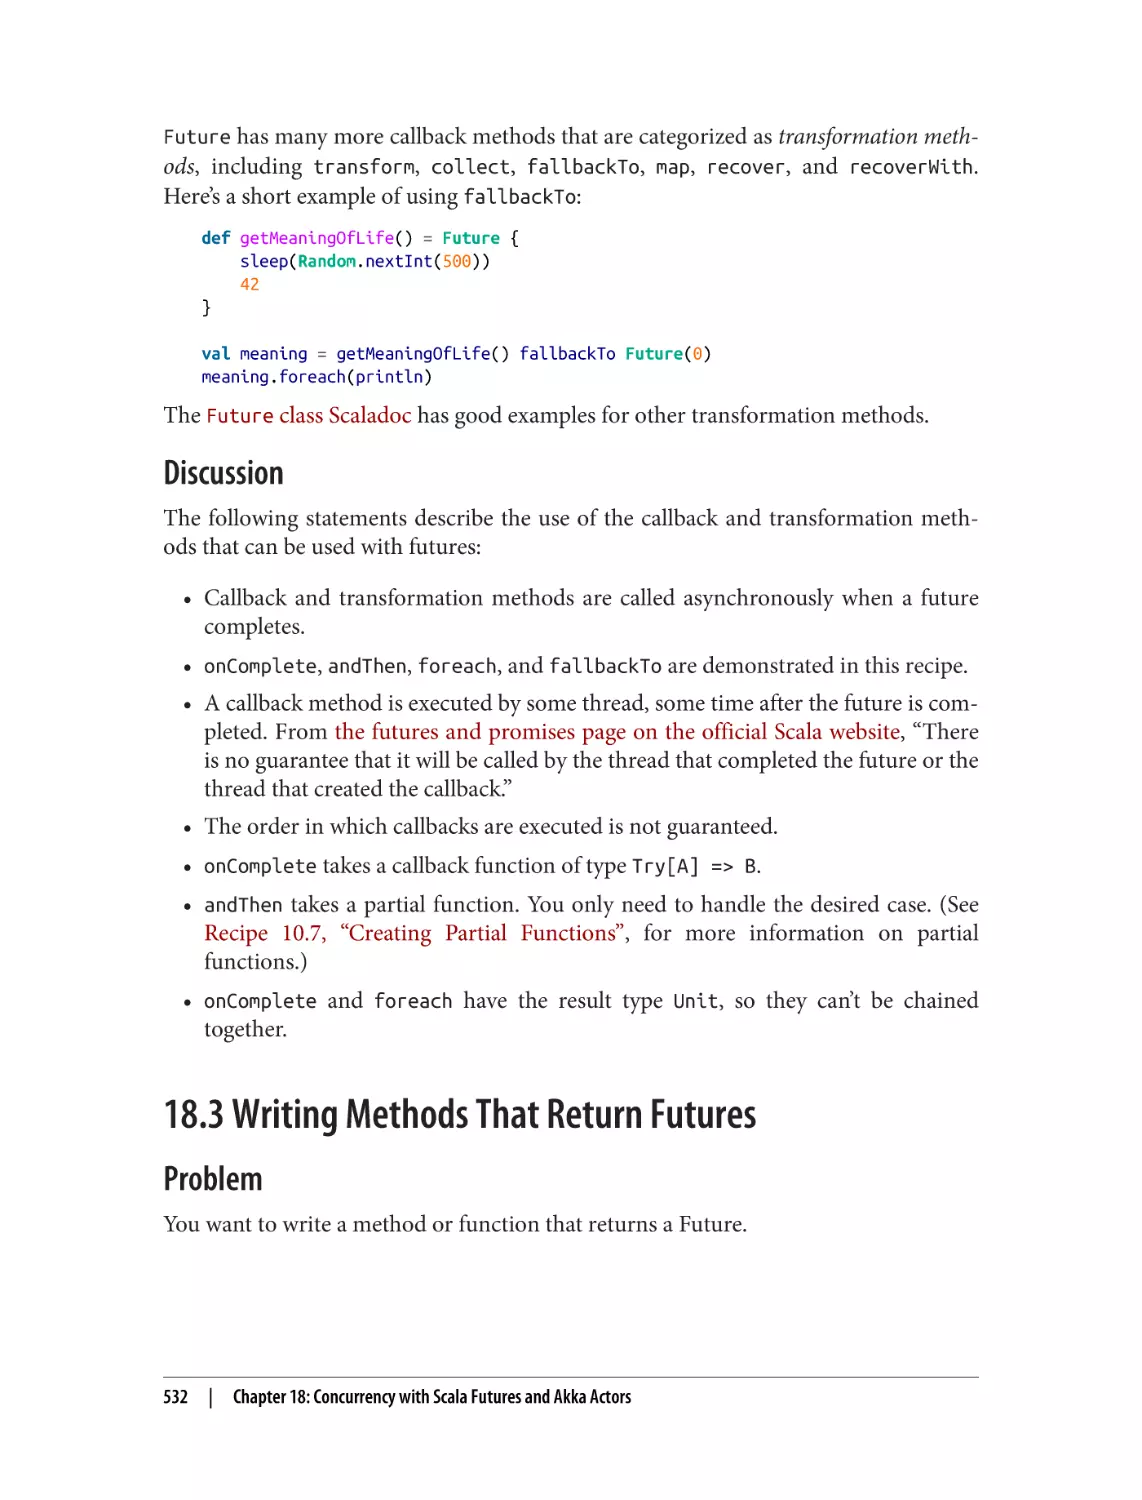 Discussion
18.3 Writing Methods That Return Futures
Problem